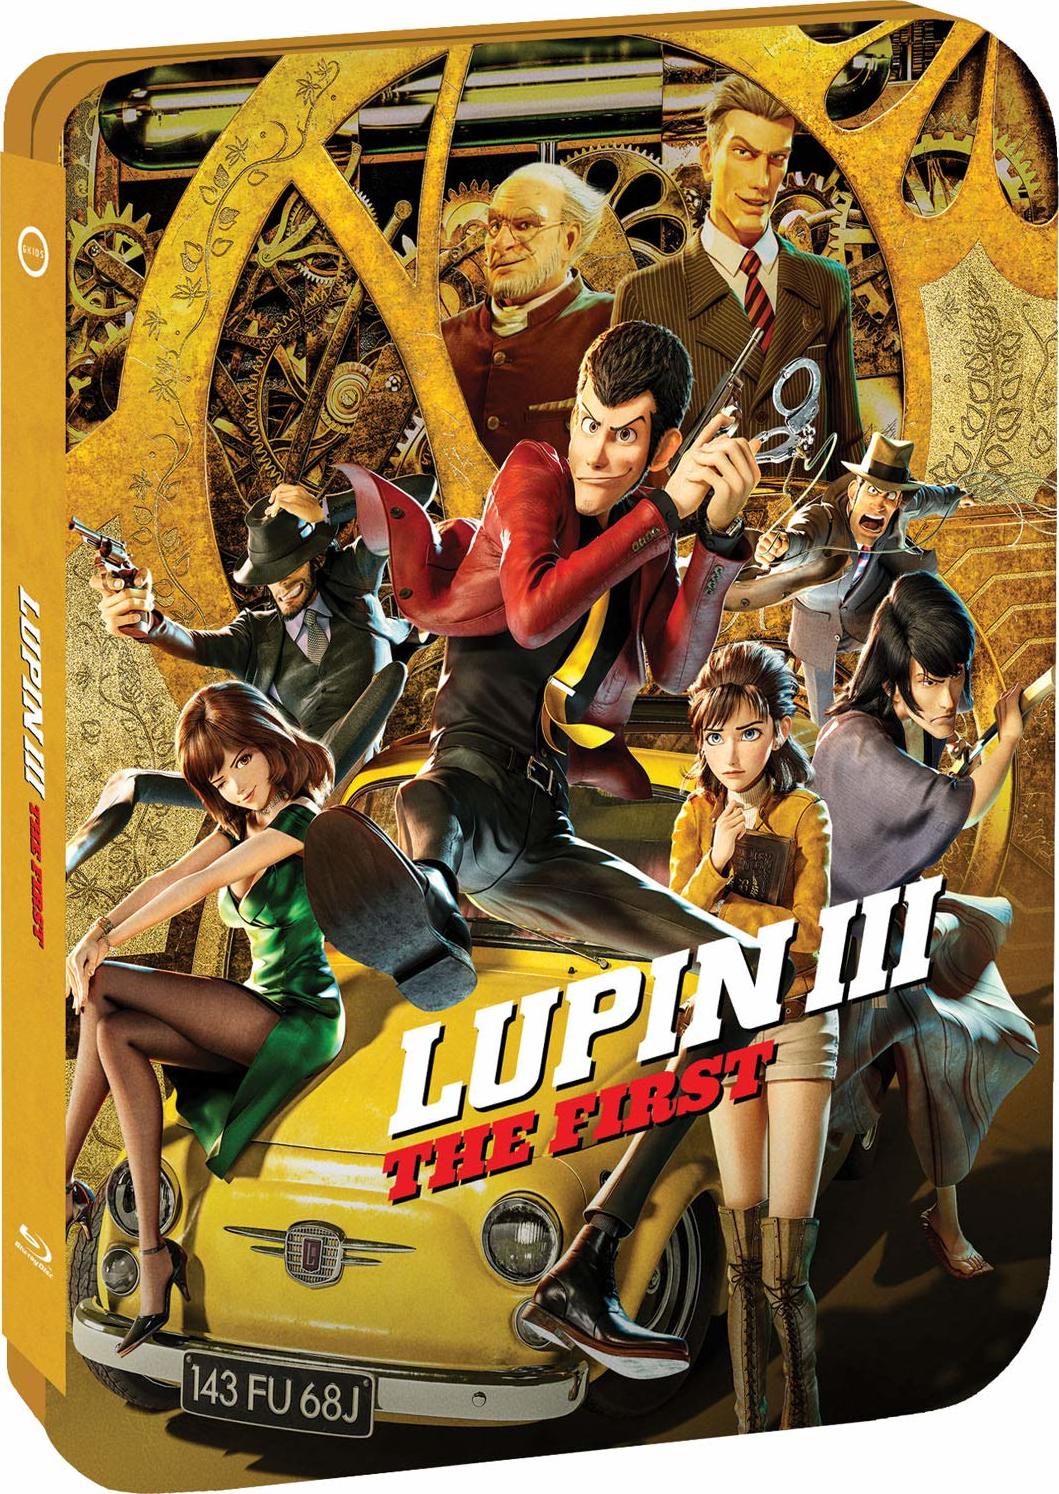 Lupin III: The First Steelbook (STFR) (2019) de Takashi Yamazaki - front cover